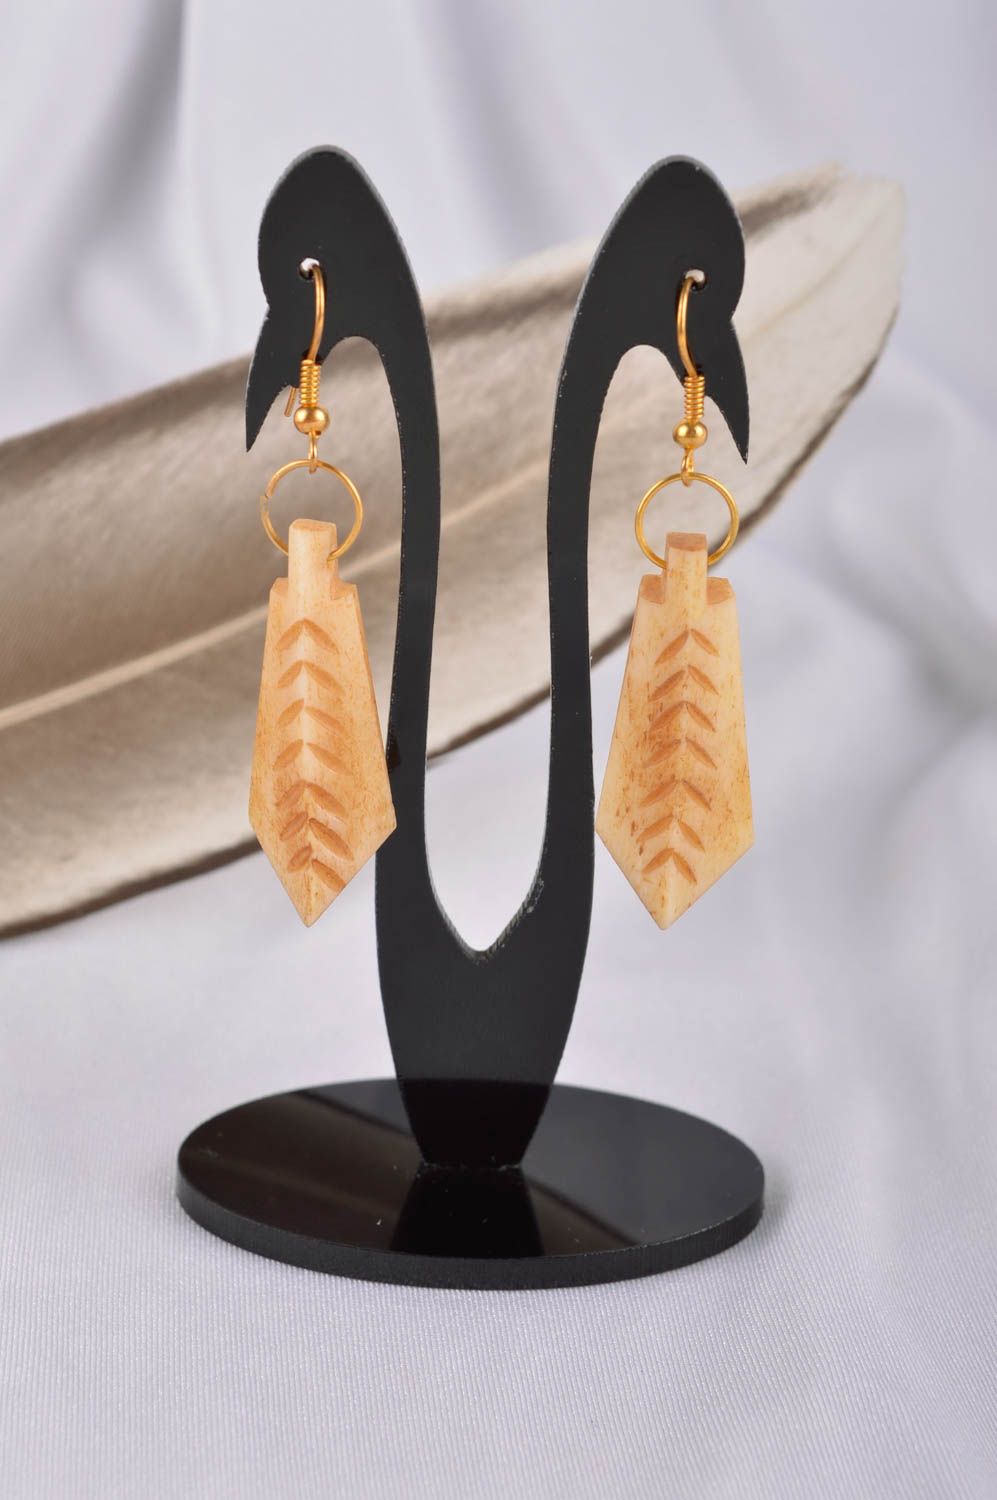 Handmade earrings designer jewelry dangling earrings fashion accessories  photo 1